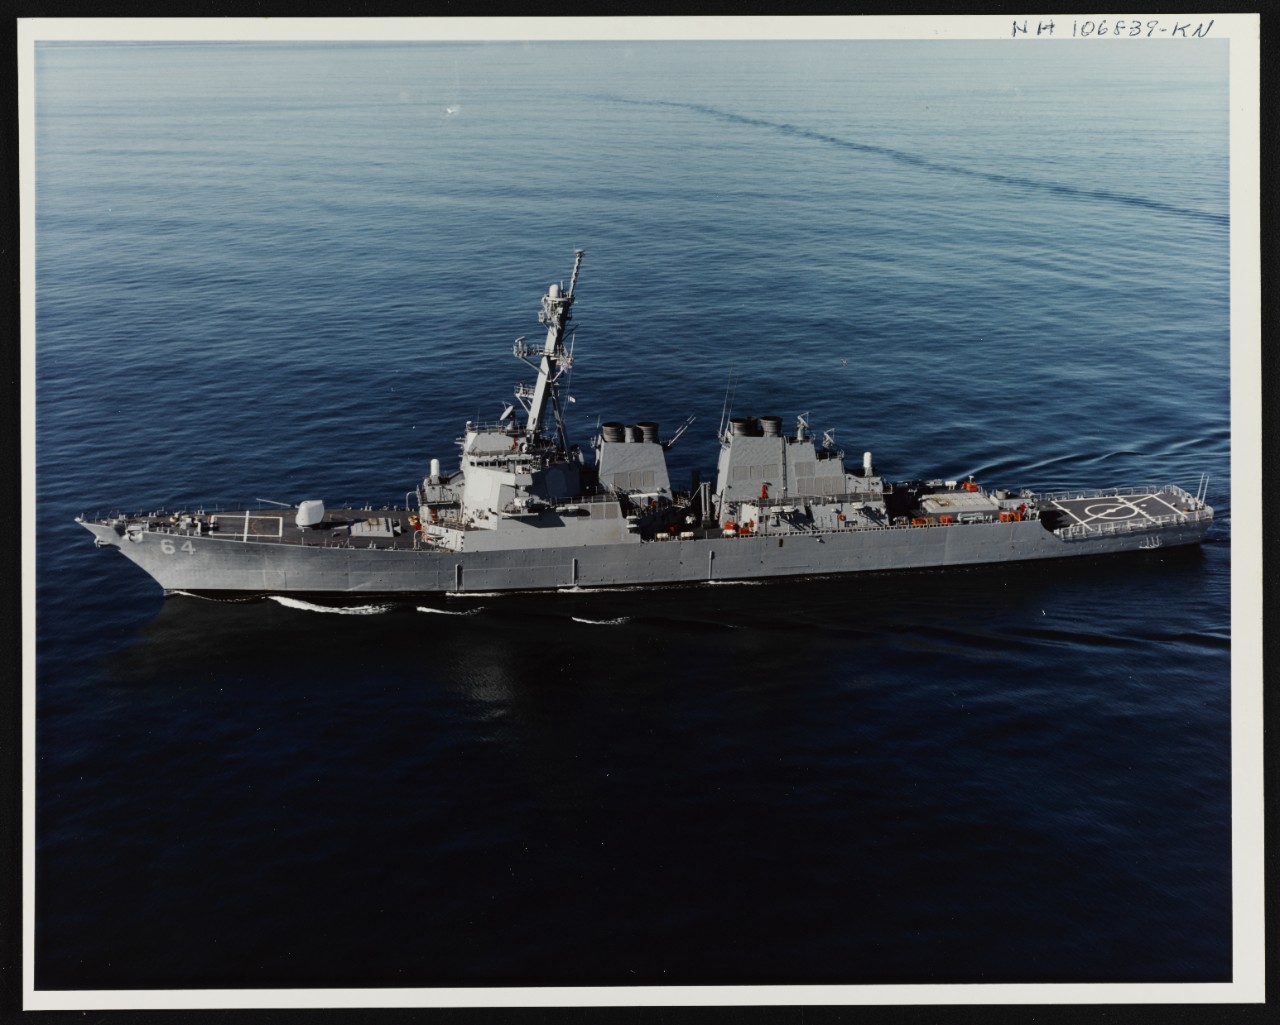 Photo # NH 106839-KN USS Carney